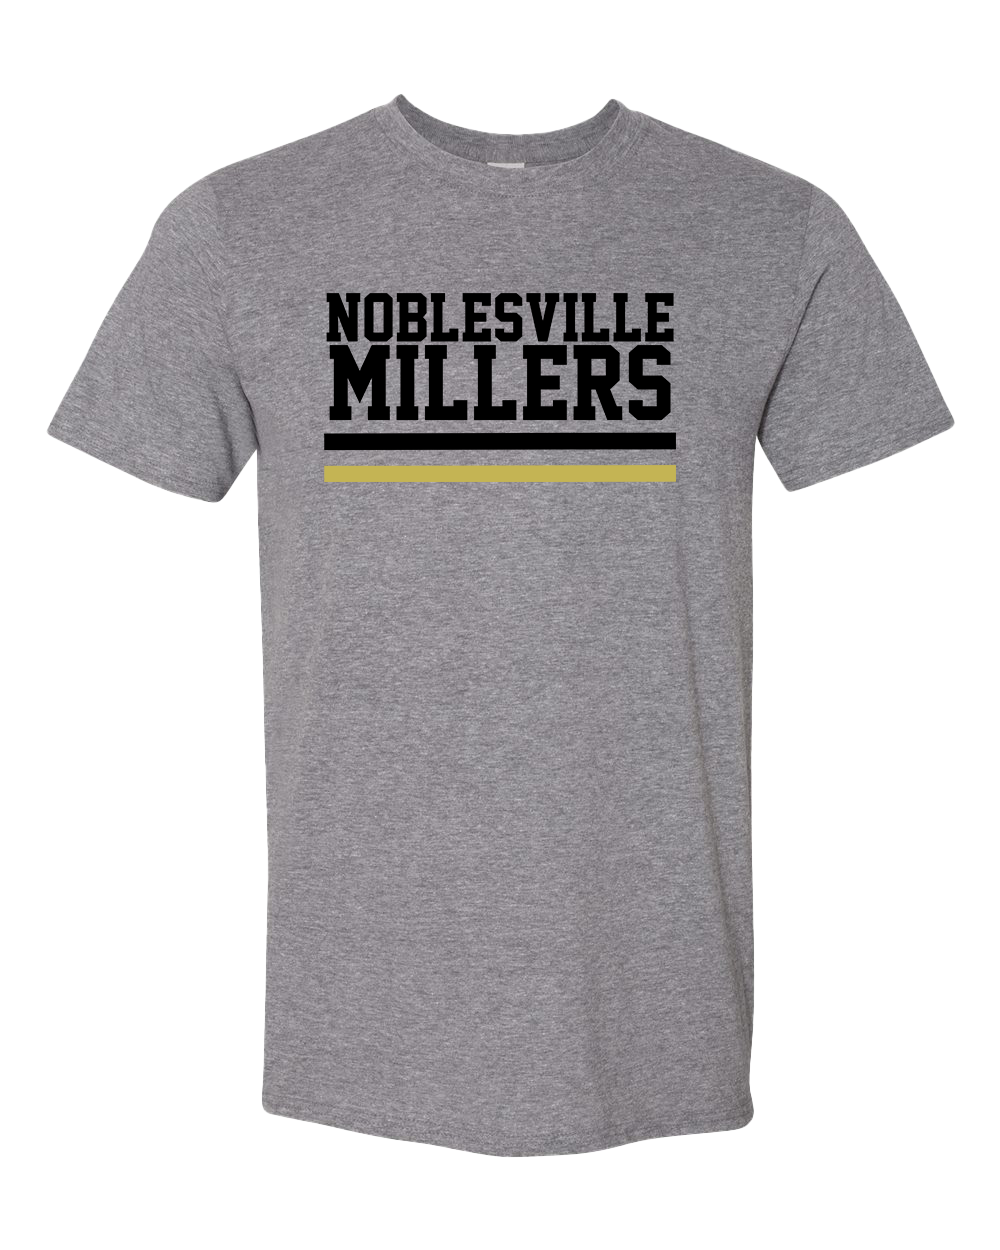 Vintage Noblesville Milers Tshirt - Graphite Heather